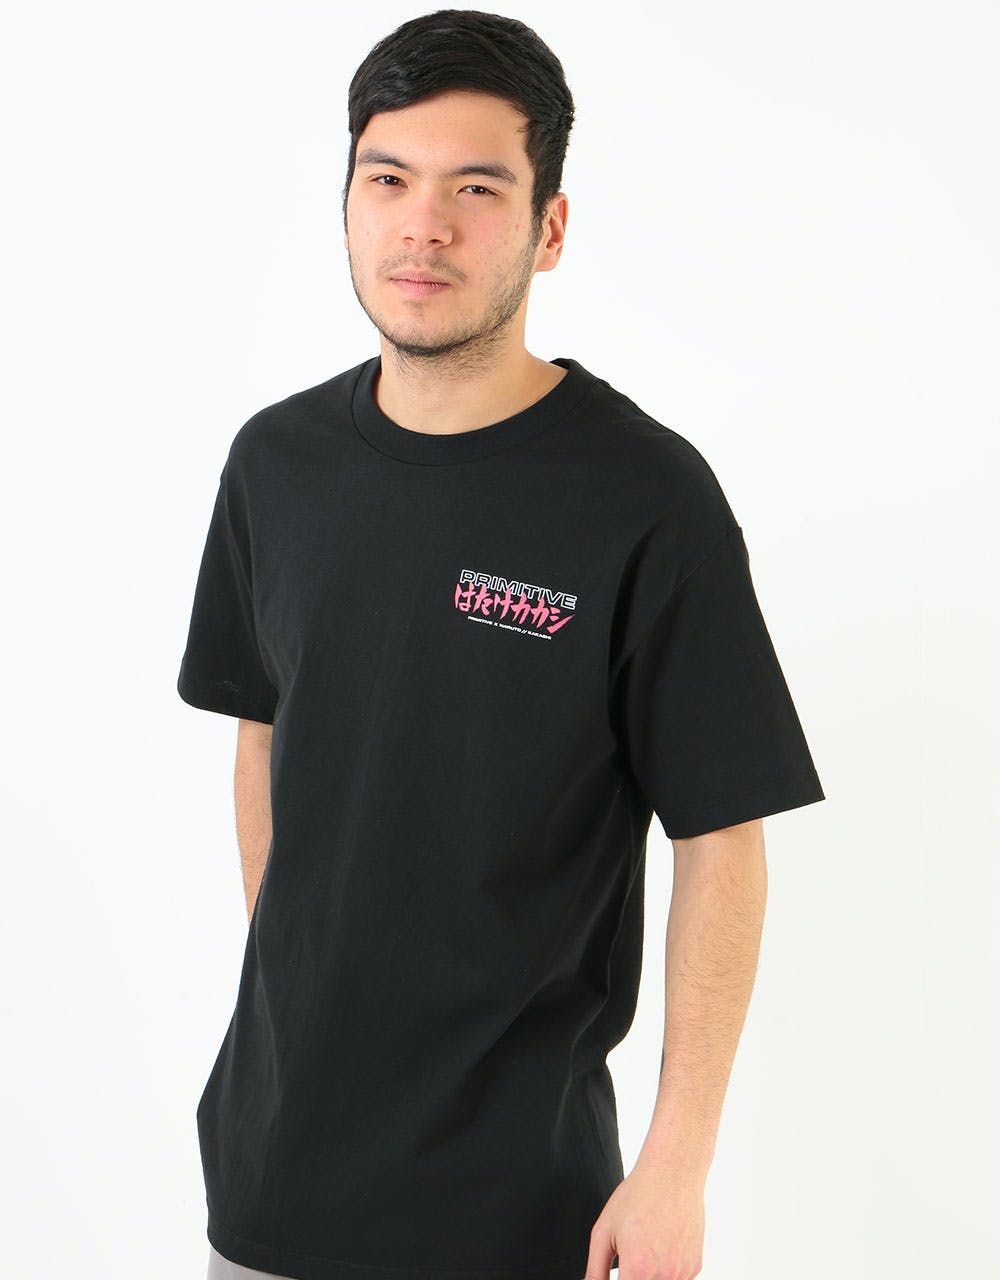 Primitive x Naruto Strike T-Shirt - Black